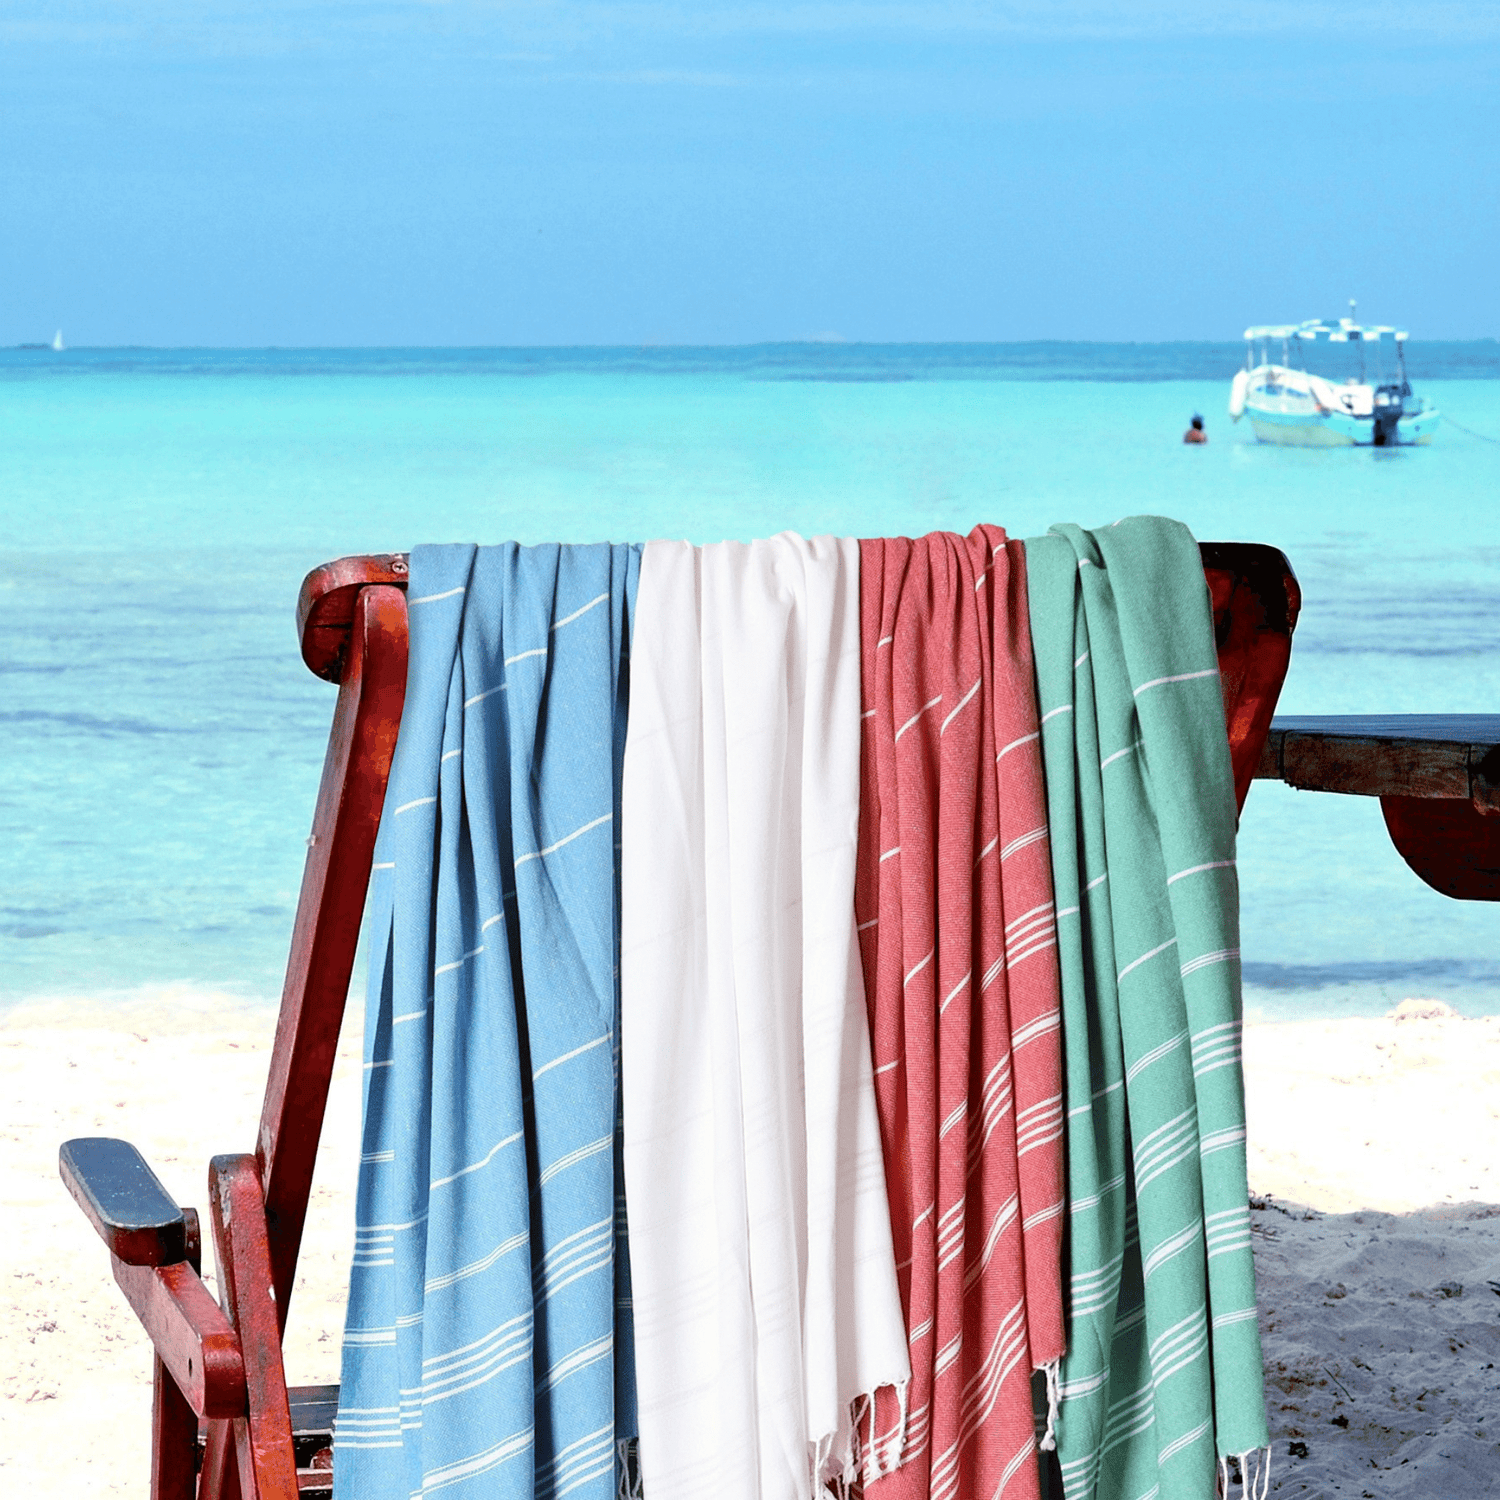 Turkish Towels on Beach Banner